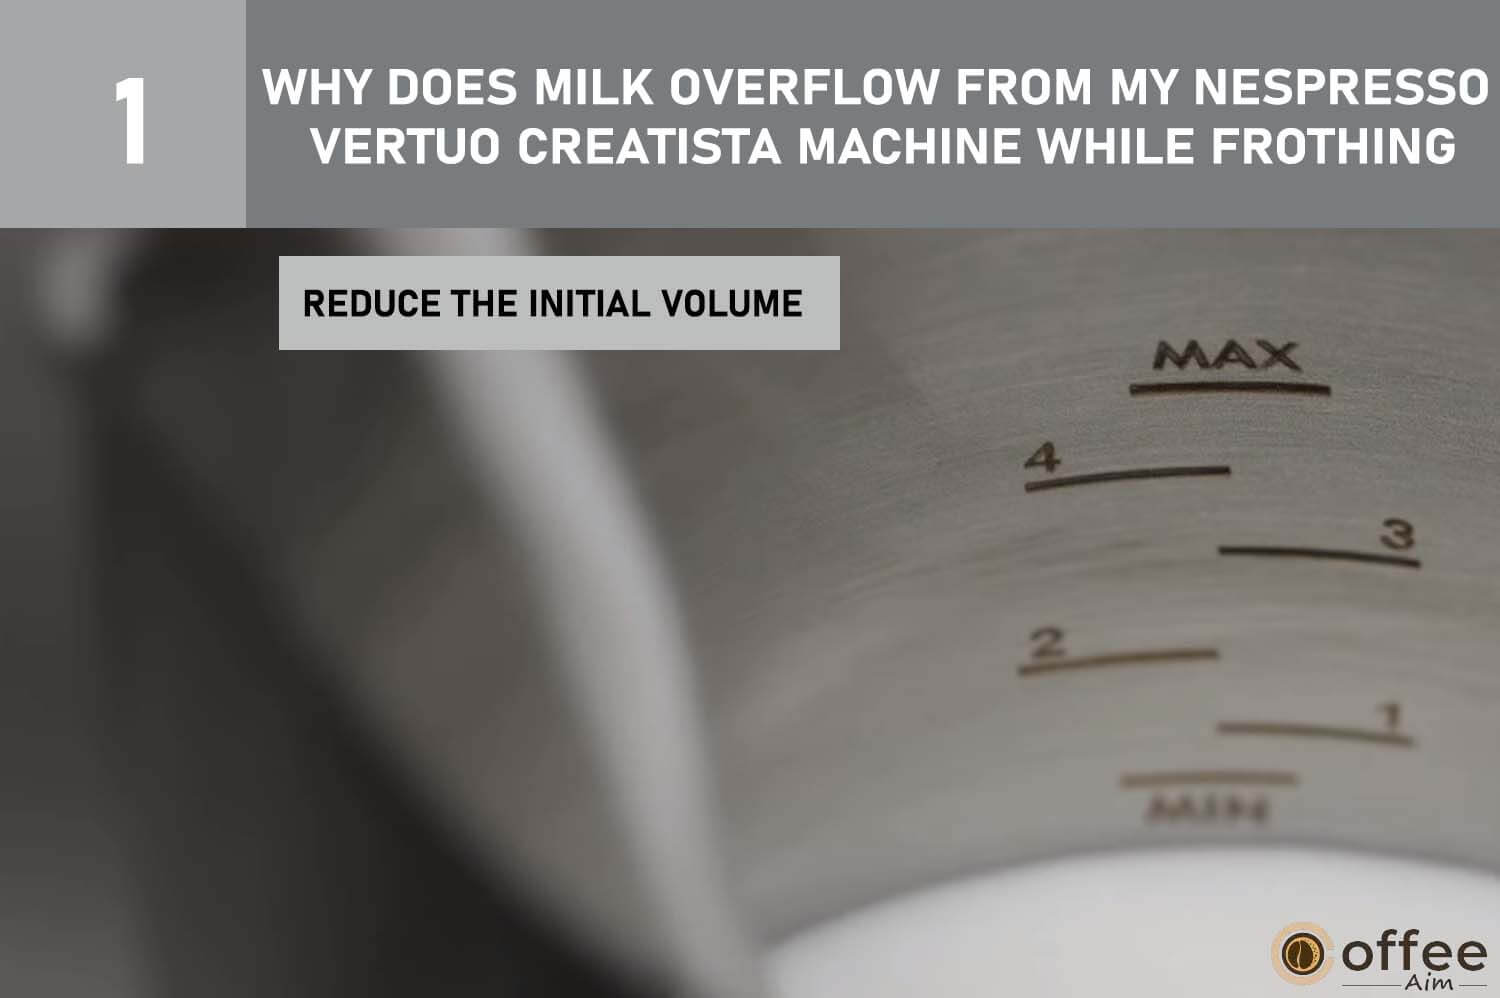 To prevent milk overflow in your Nespresso Vertuo Creatista, simply lower the initial milk volume.